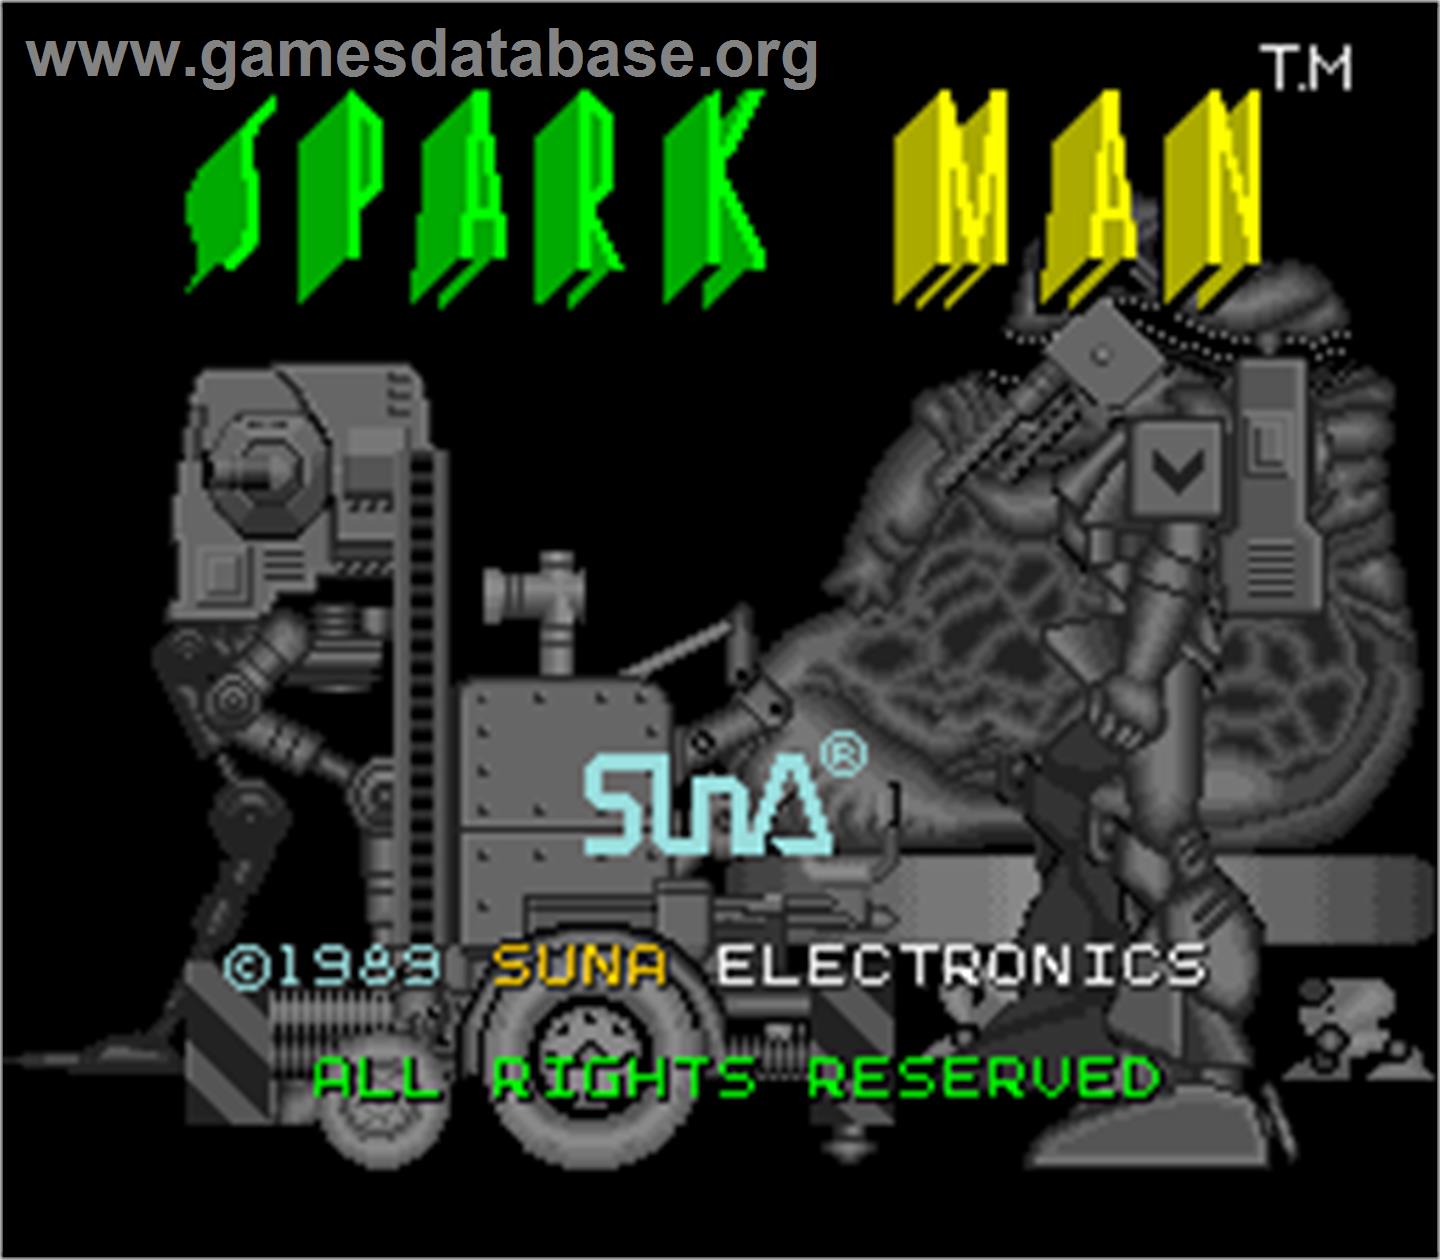 Spark Man - Arcade - Artwork - Title Screen